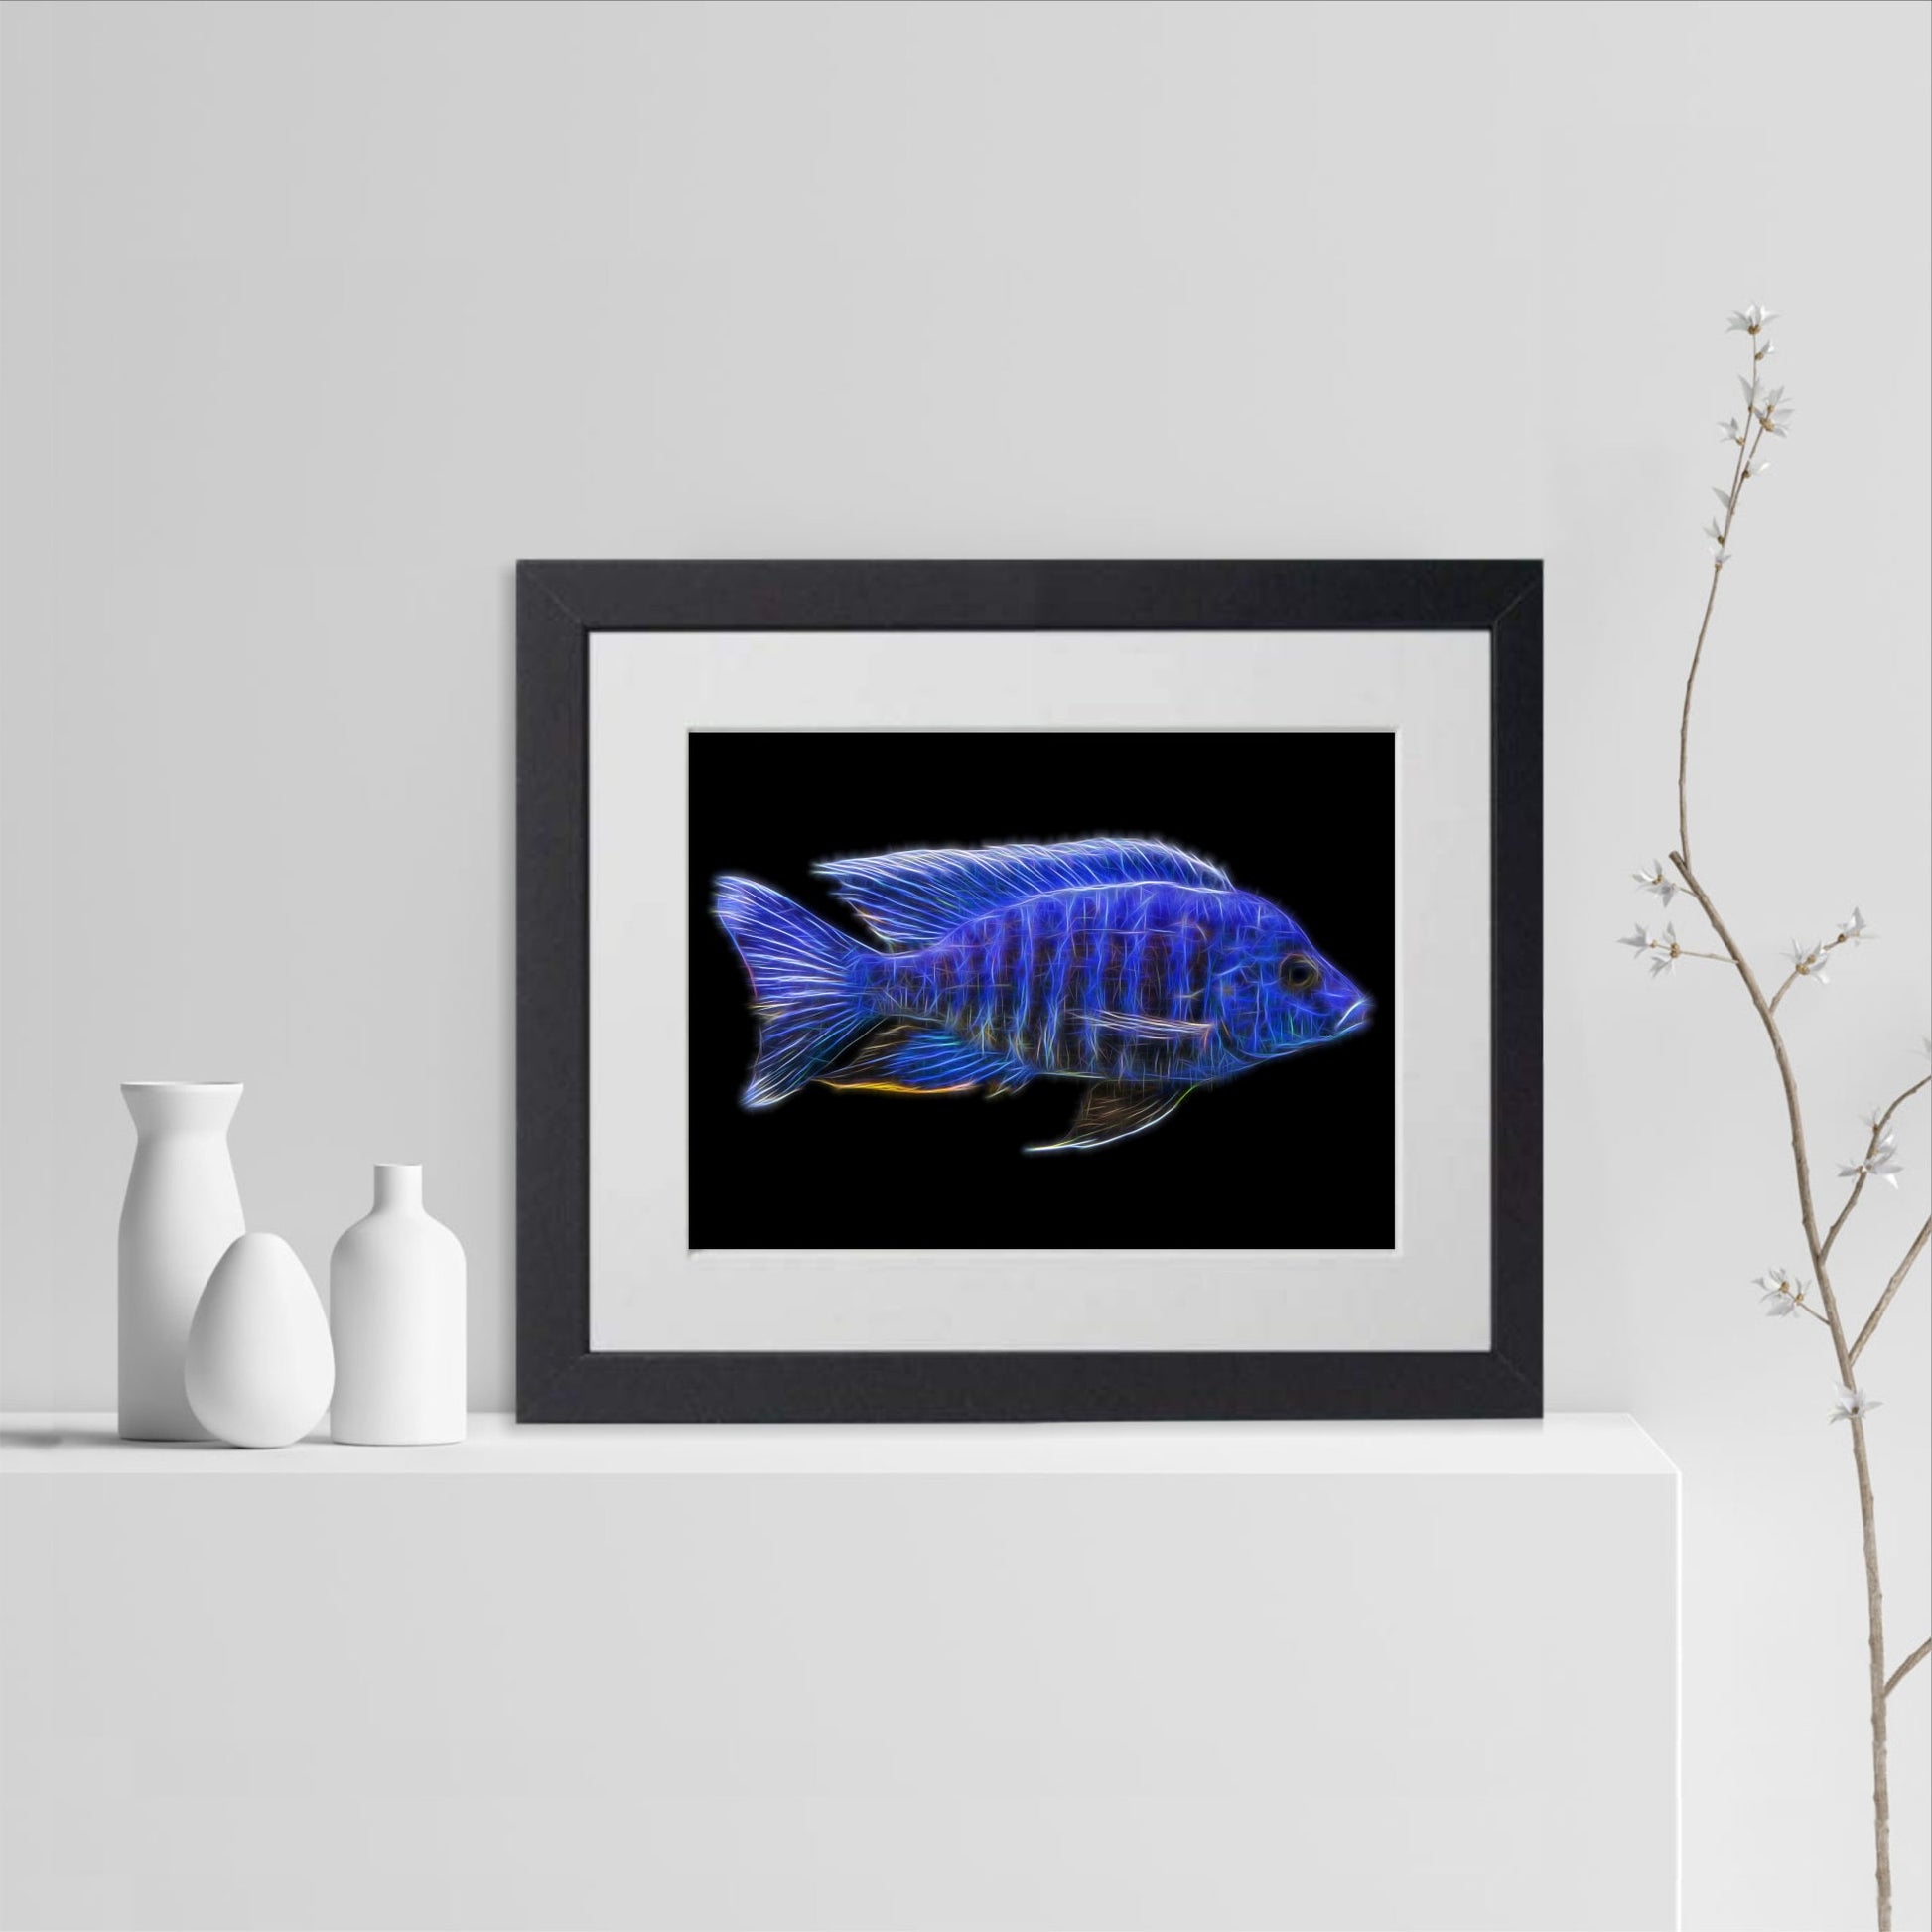 Blue Regal Peacock Cichlid Fish Print with Stunning Fractal Art Design. Aulonocara